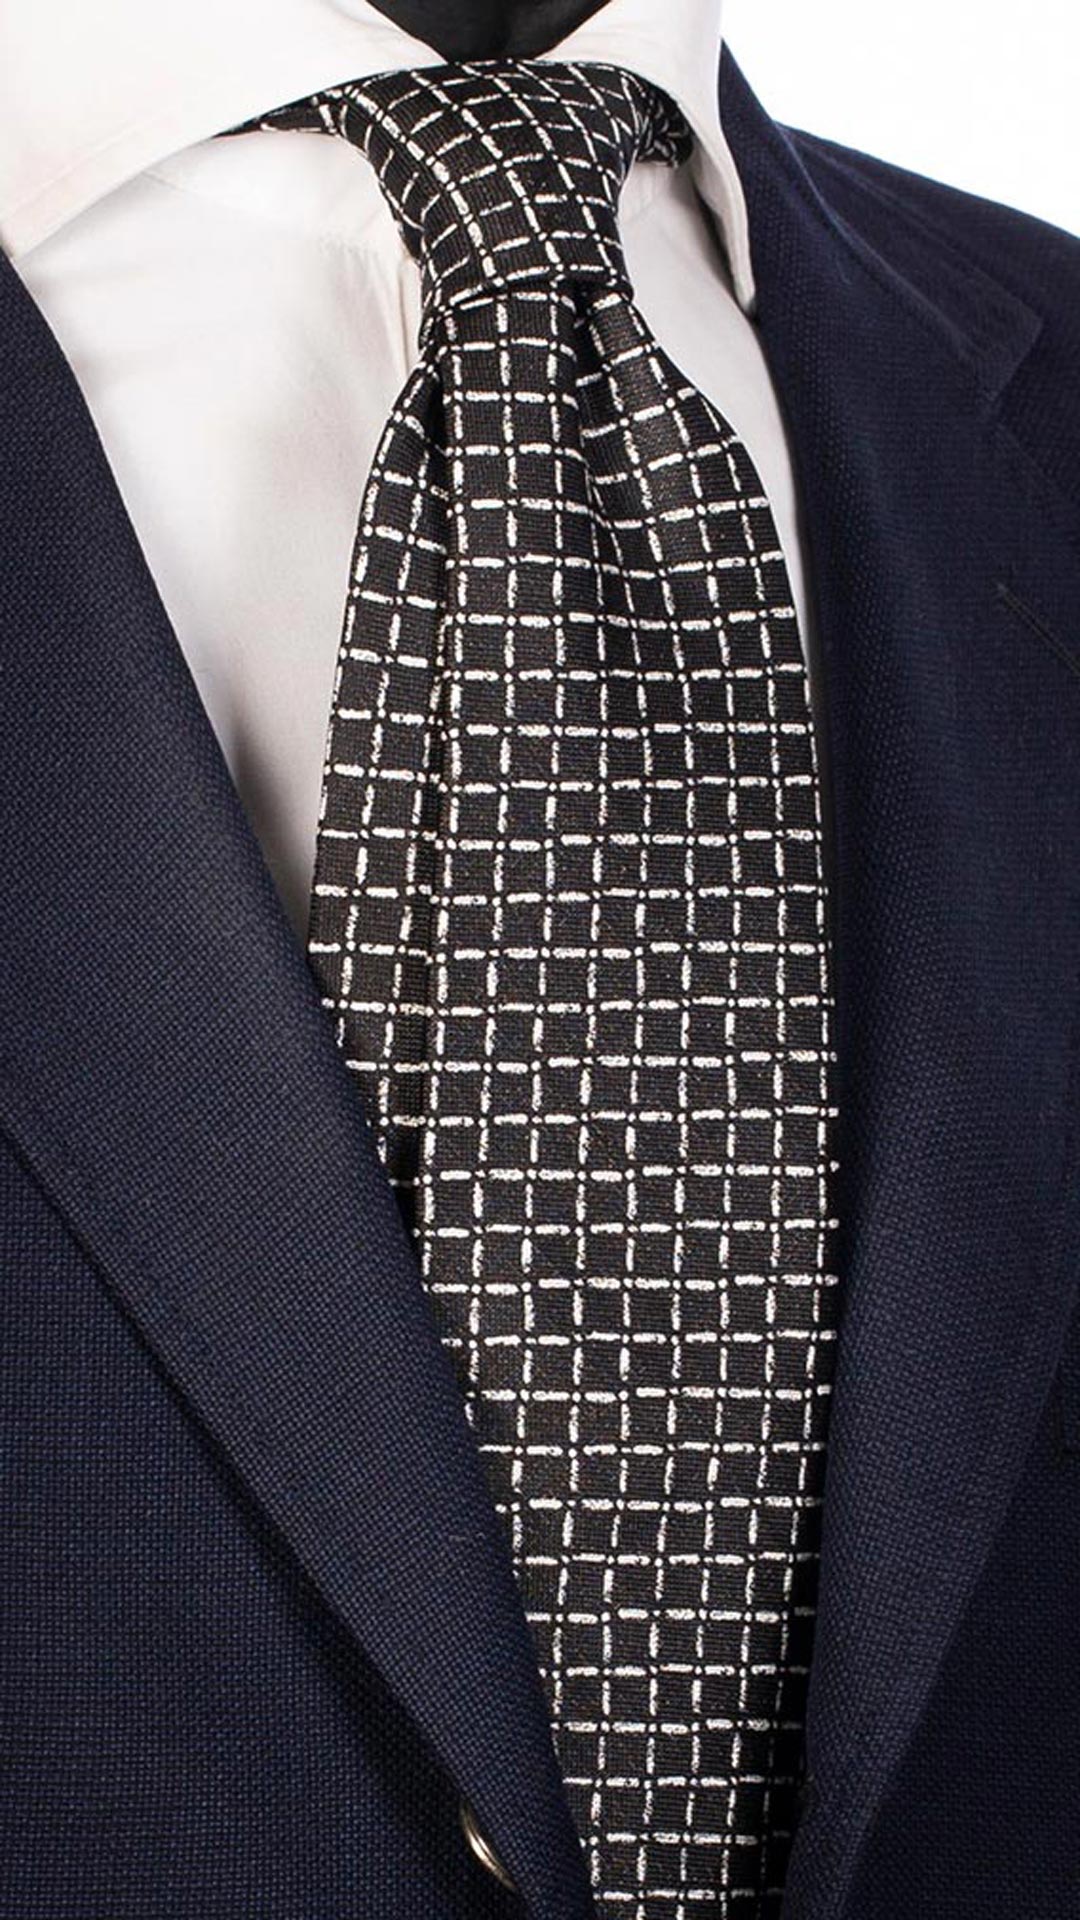 Cravatta da Cerimonia di Seta a Quadri di Seta Nera Bianchi CY5409 Made in Italy Graffeo Cravatte